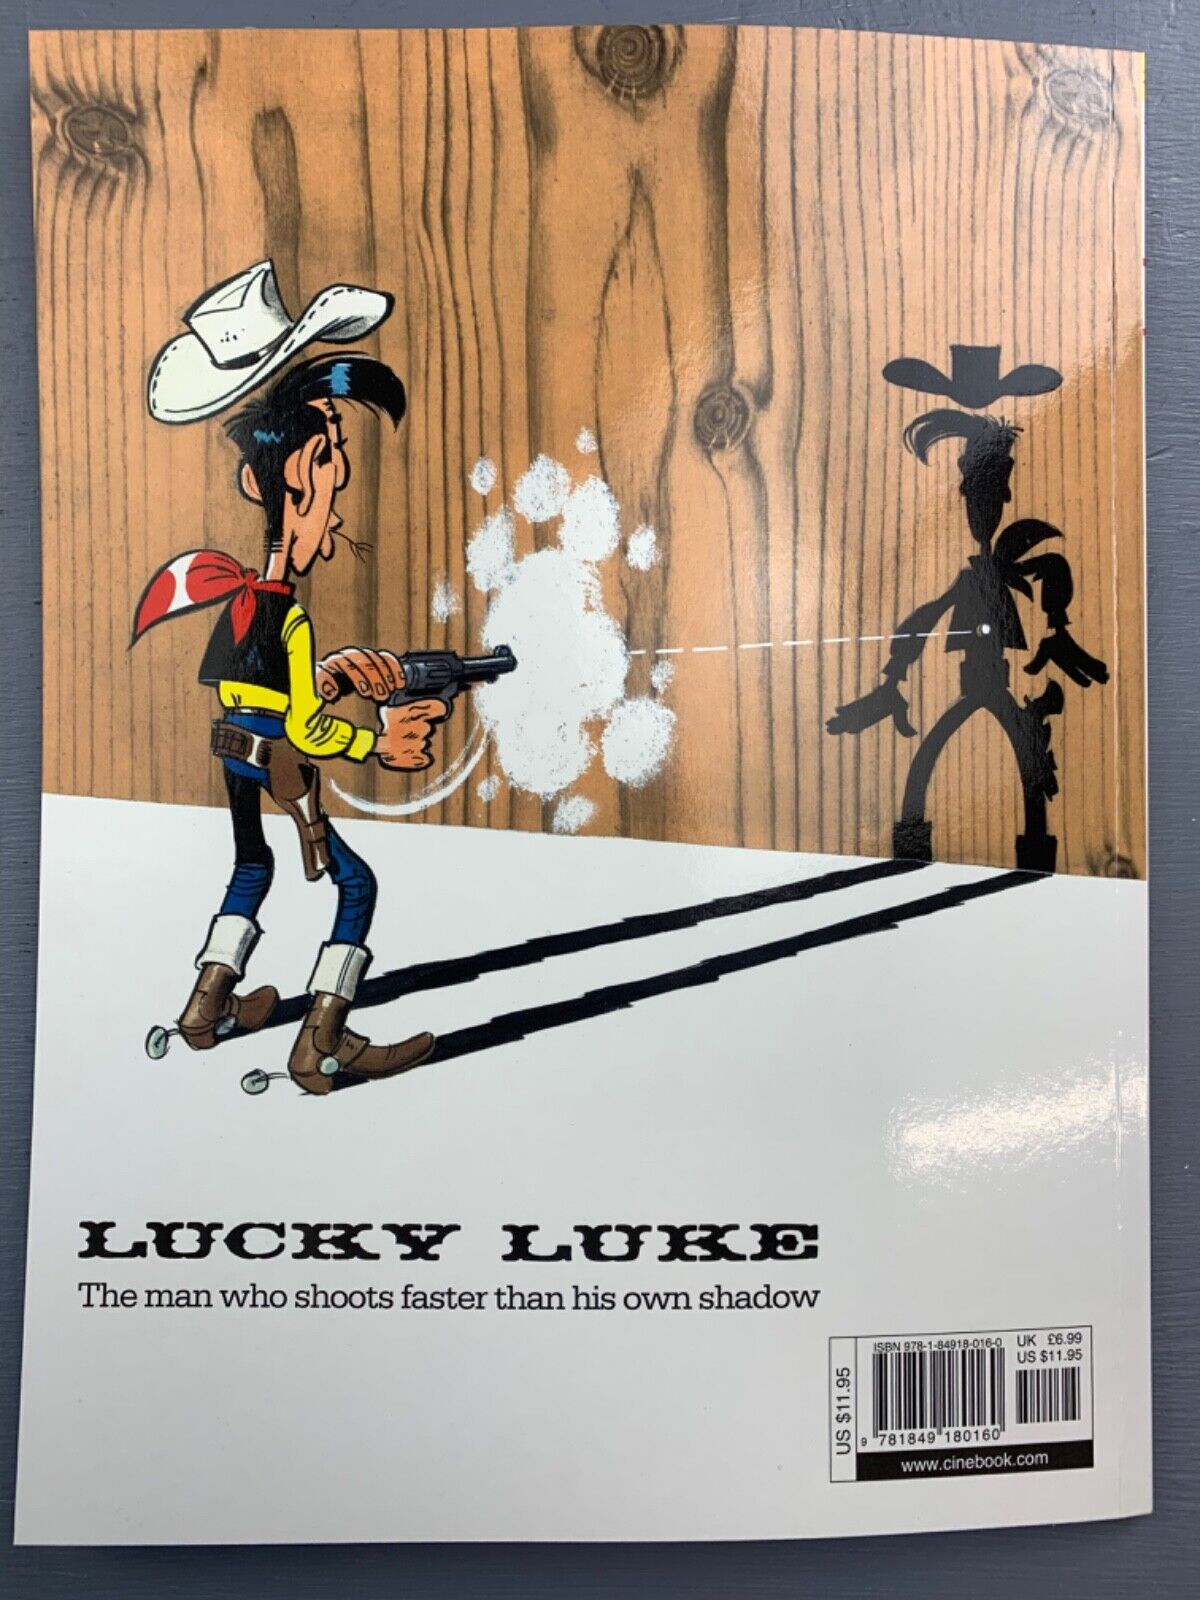 21 The 20th Cavalry Lucky Luke Cinebook Paperback UK Comic Book